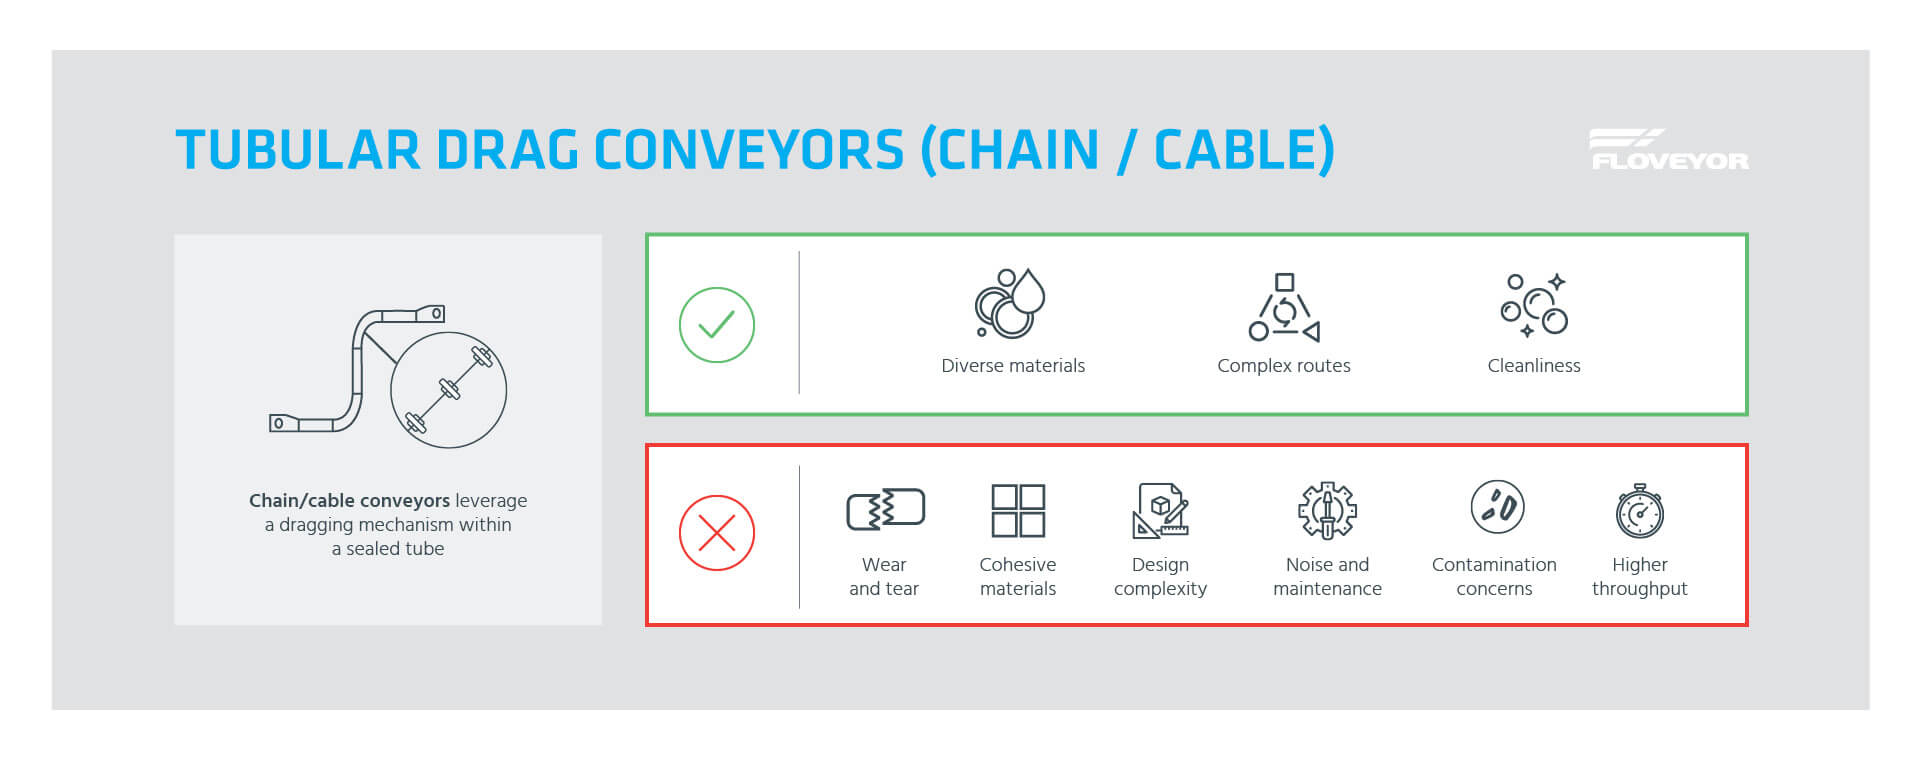 Tubular drag conveyors (chain / cable) - Floveyor comparison graphic